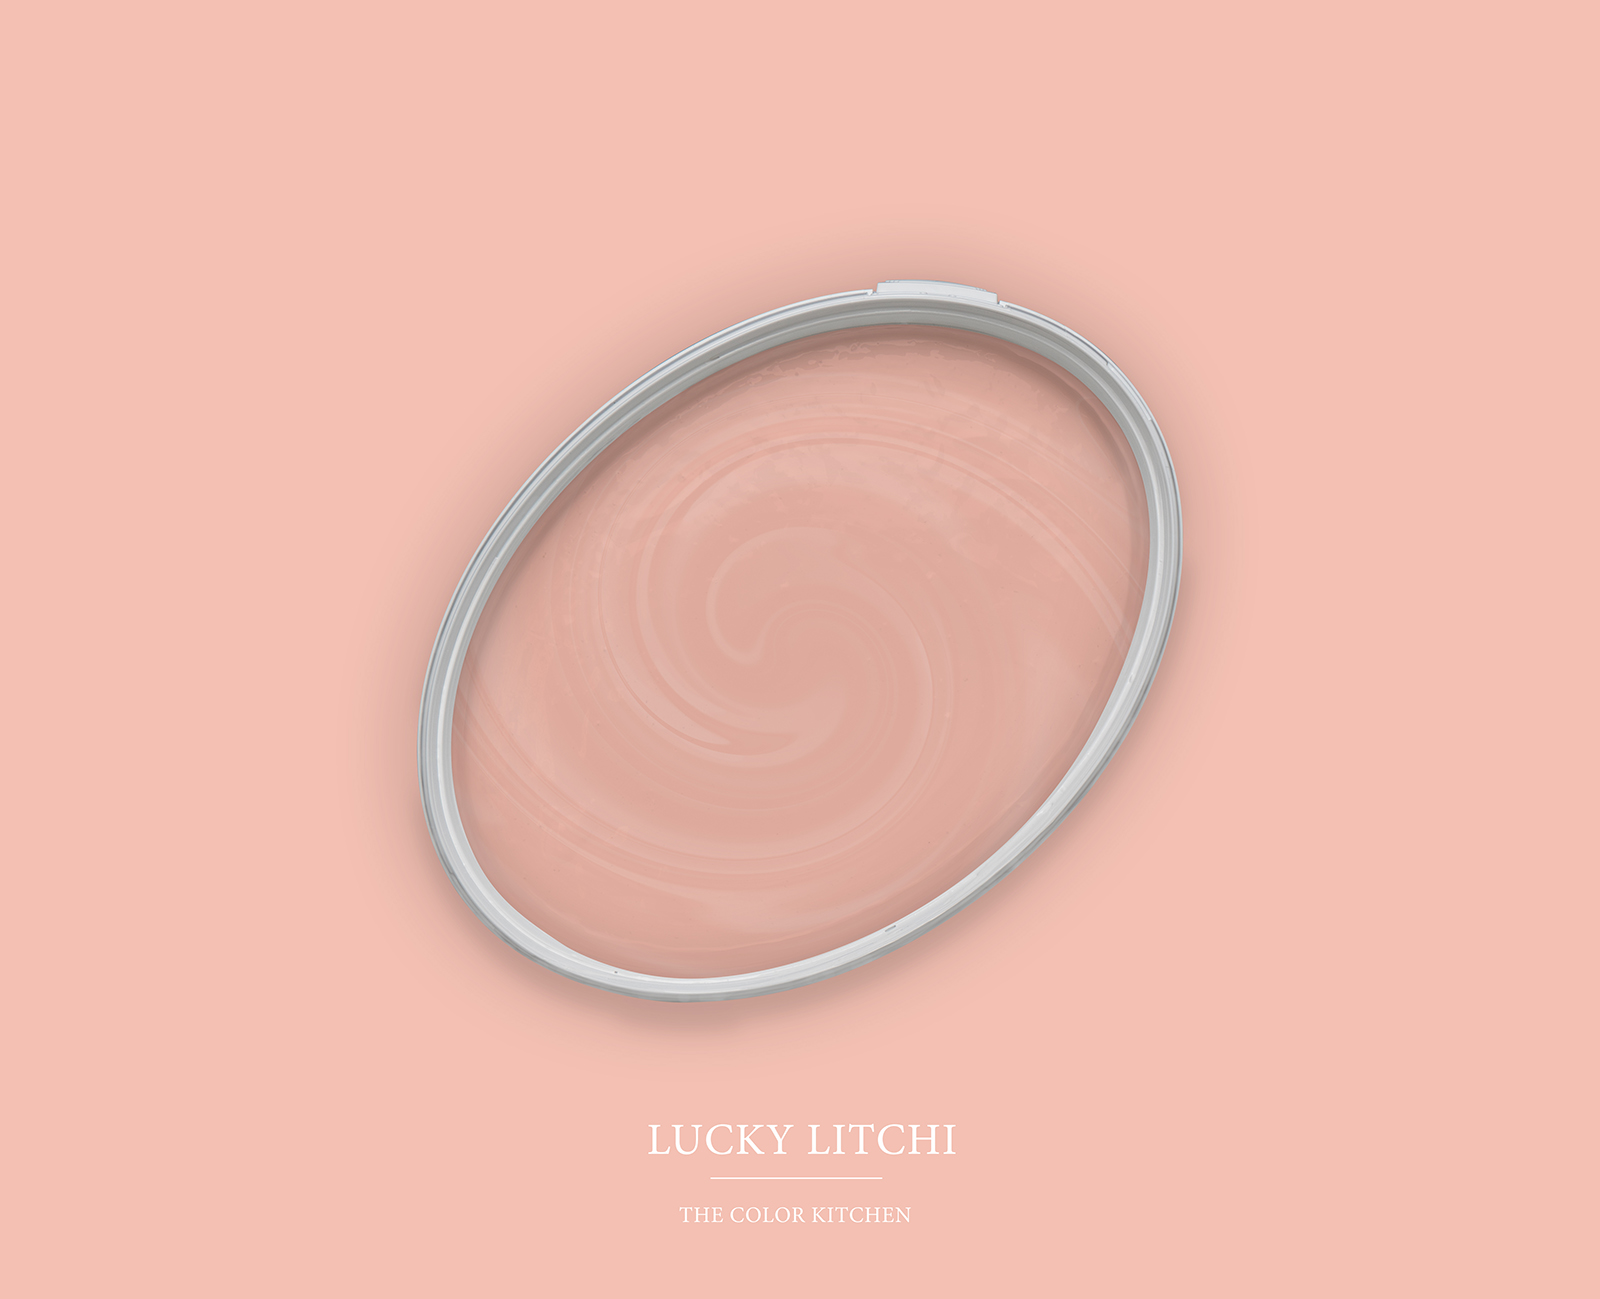         Wandfarbe TCK7003 »Lucky Litchi« in hellem Rosa – 2,5 Liter
    